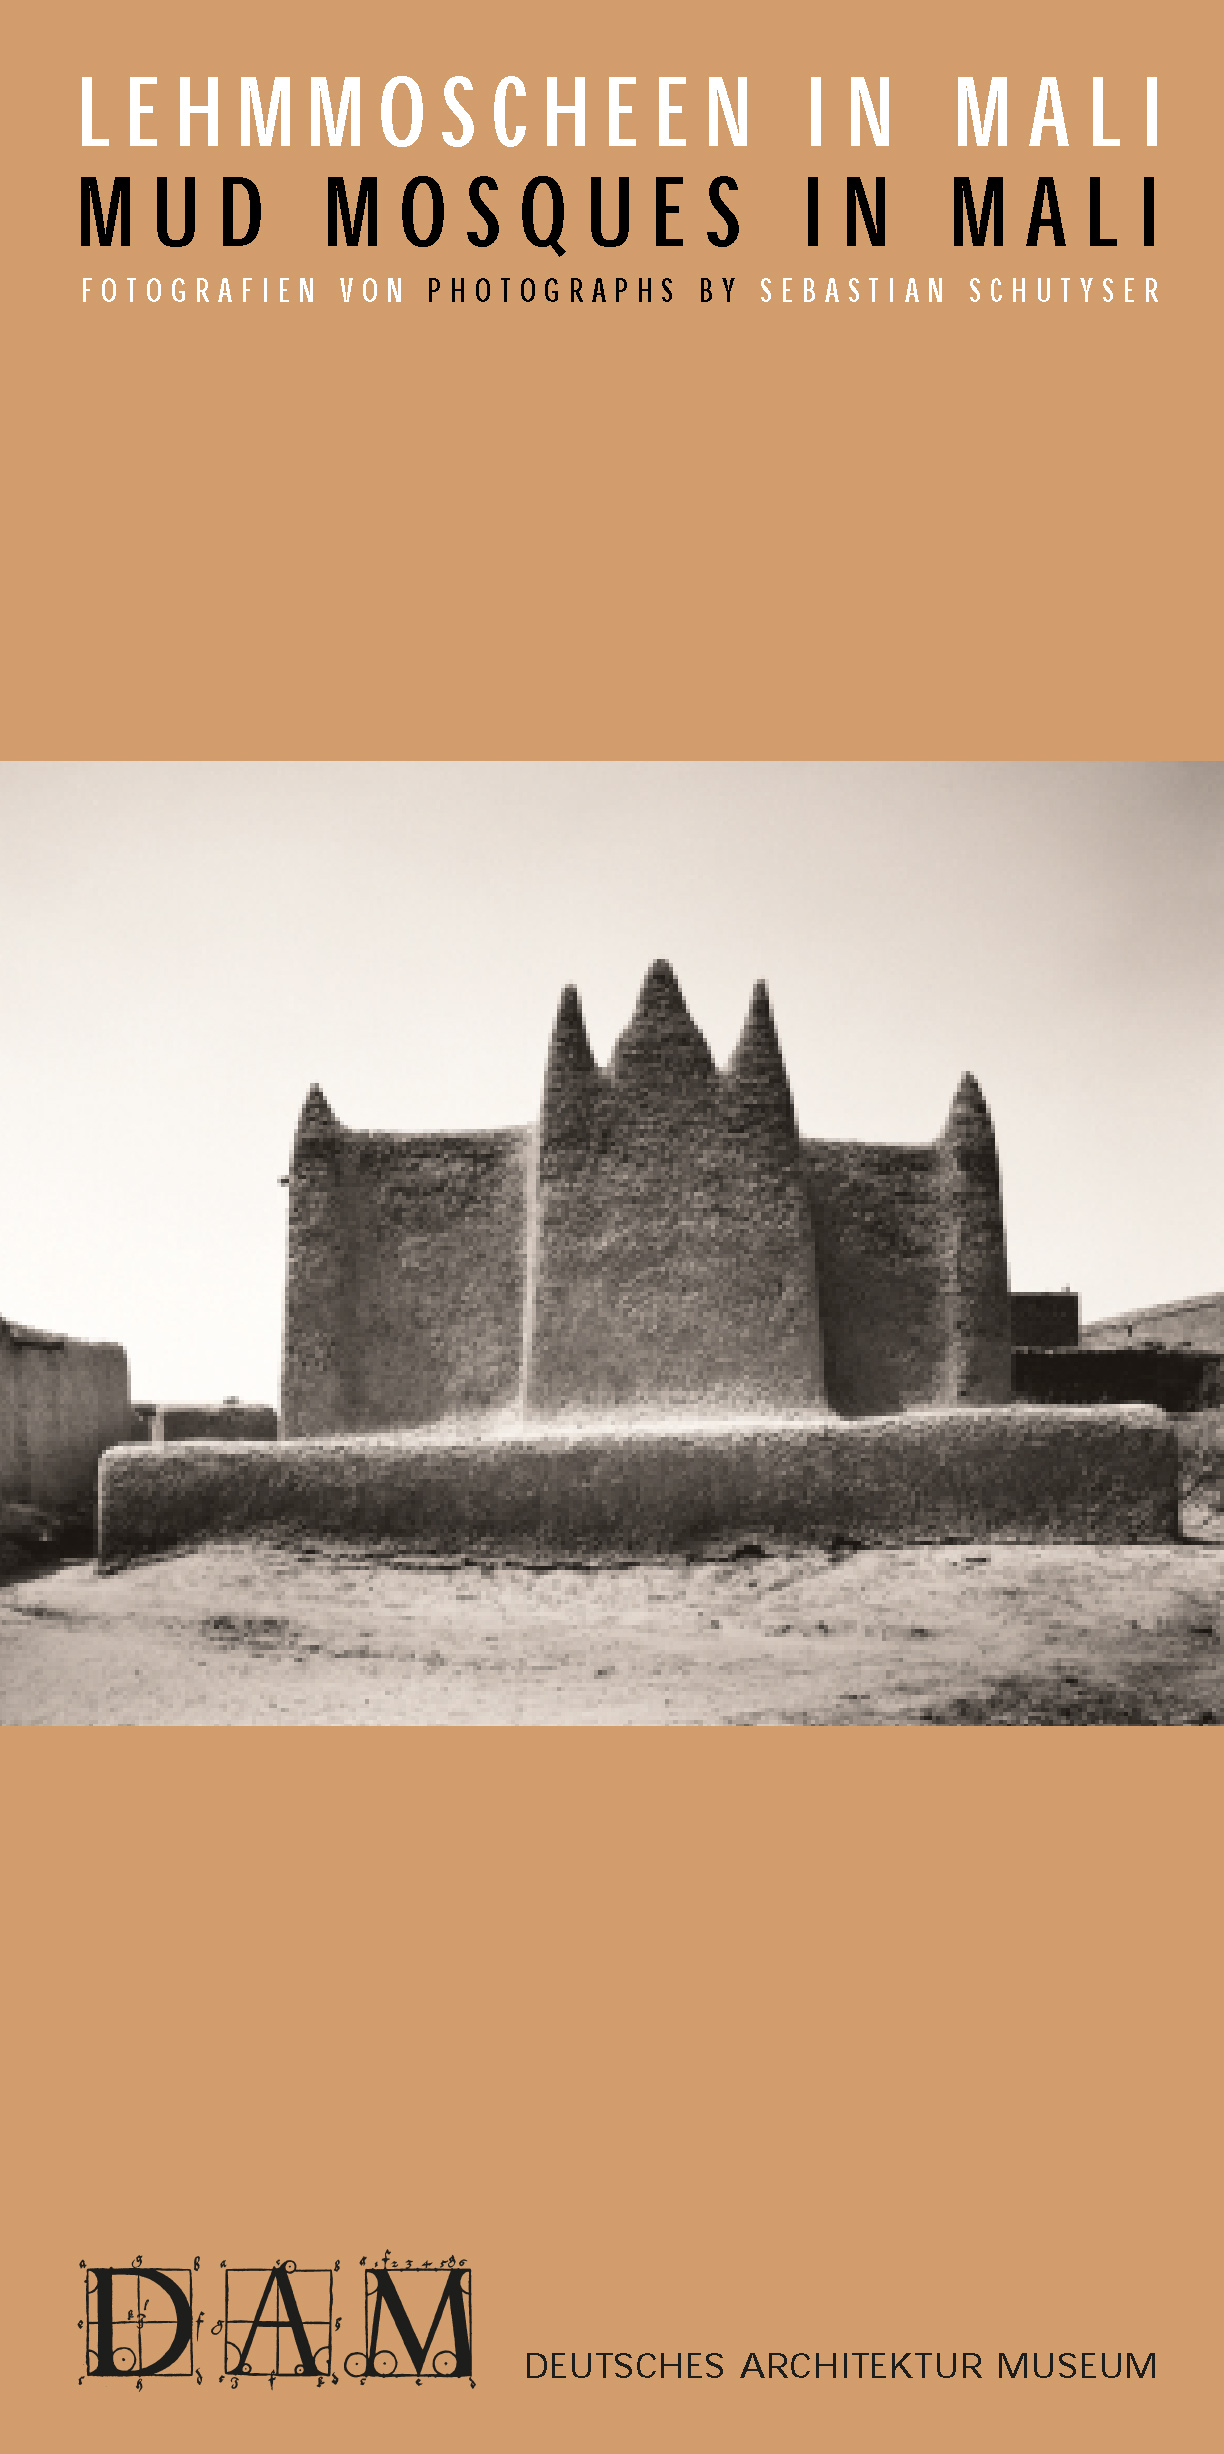 Adobe mosques in Mali exhibition at the Deutsches Architektur Museum